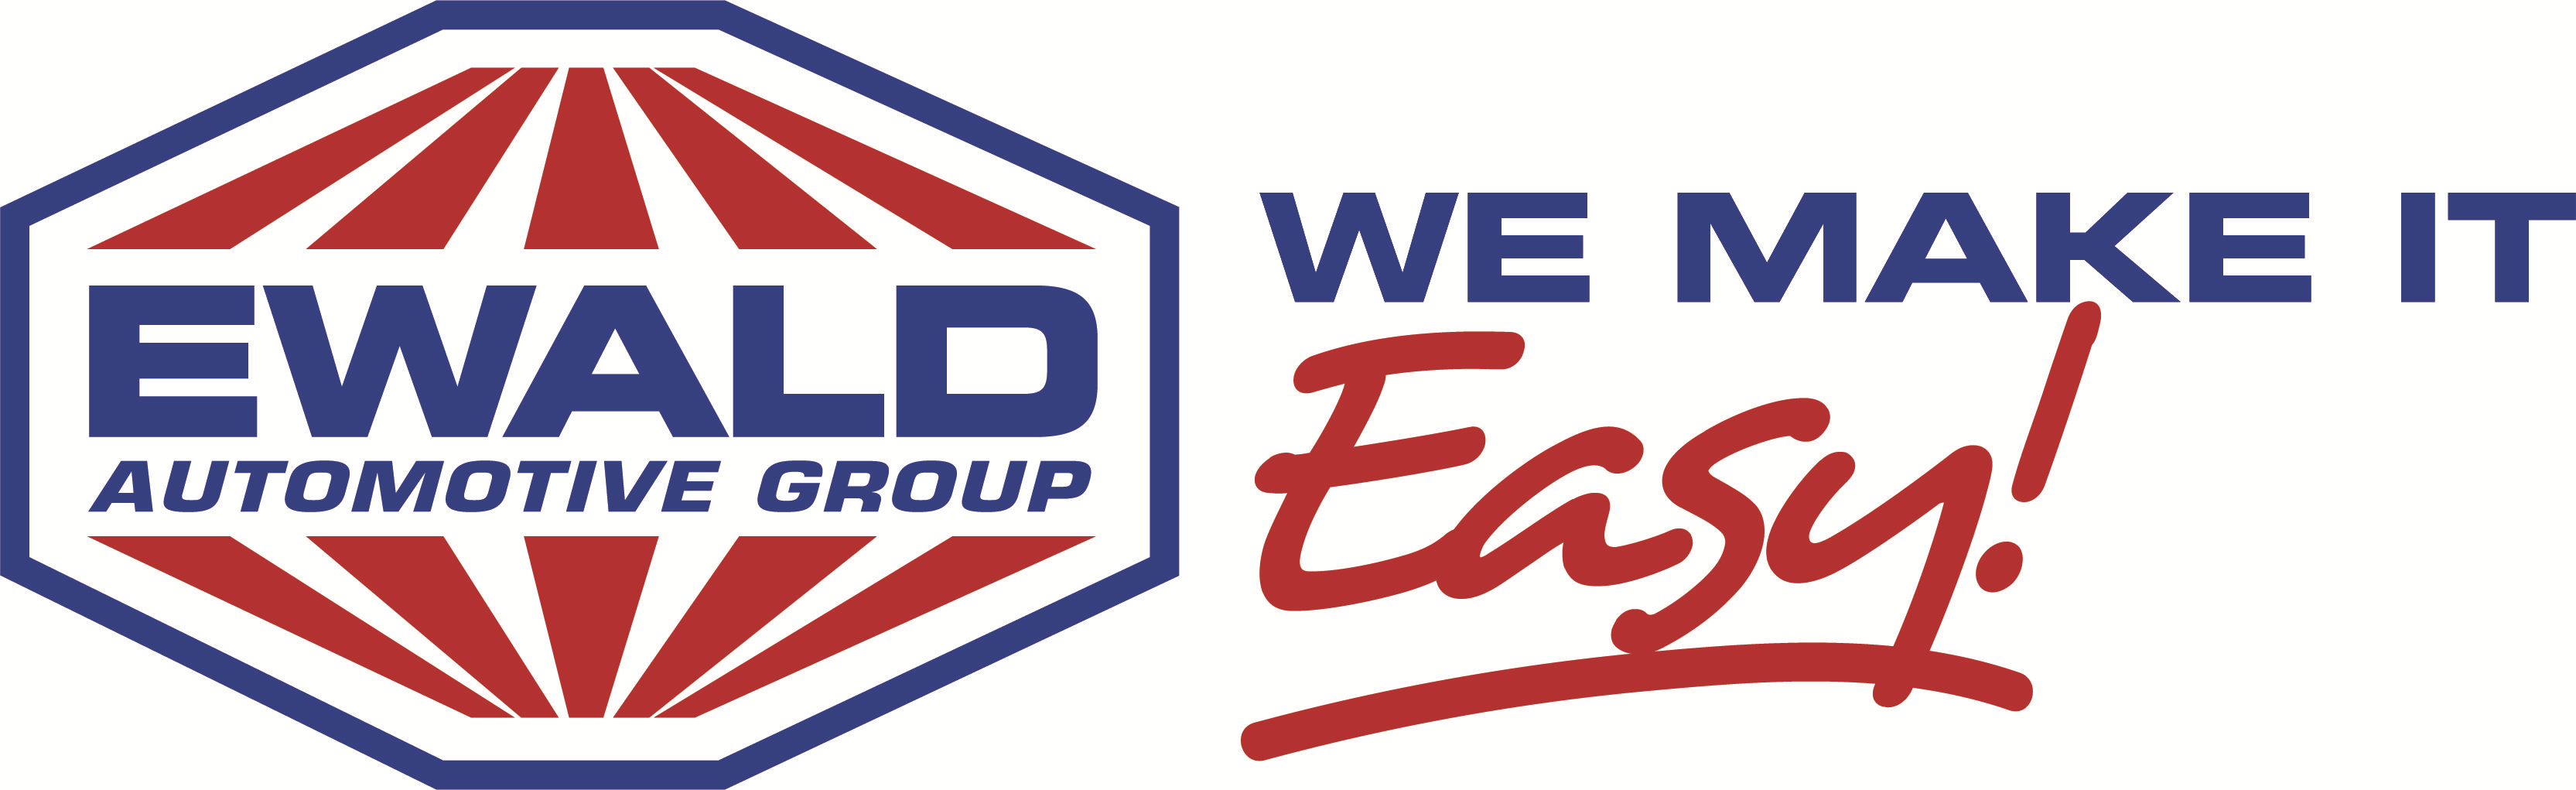 Ewald Automotive Group logo